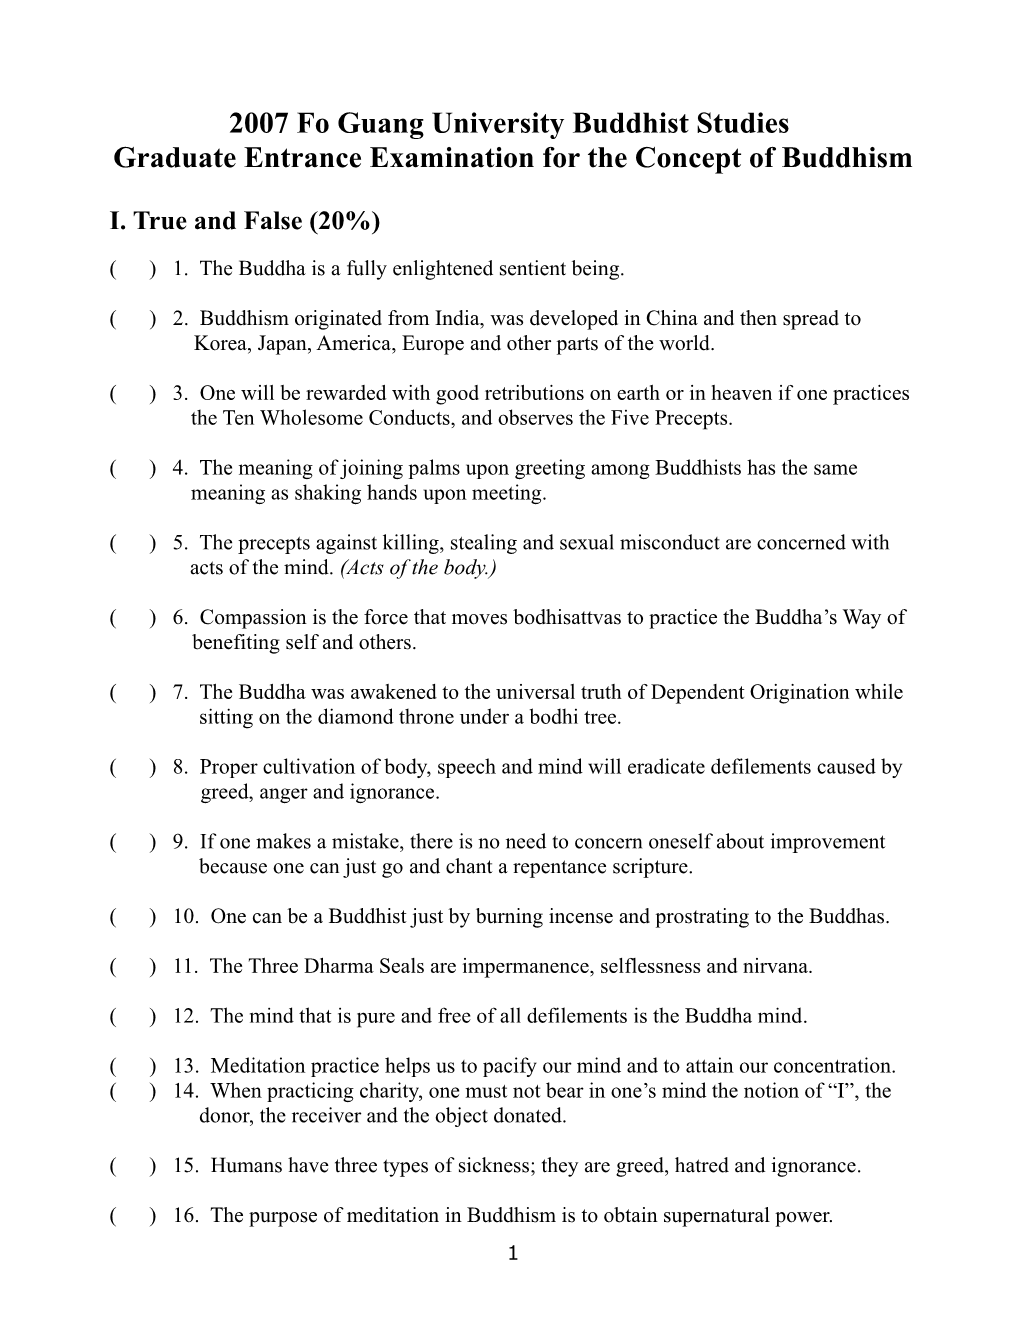 2006 Buddhist Exam Study Guide (Adult)